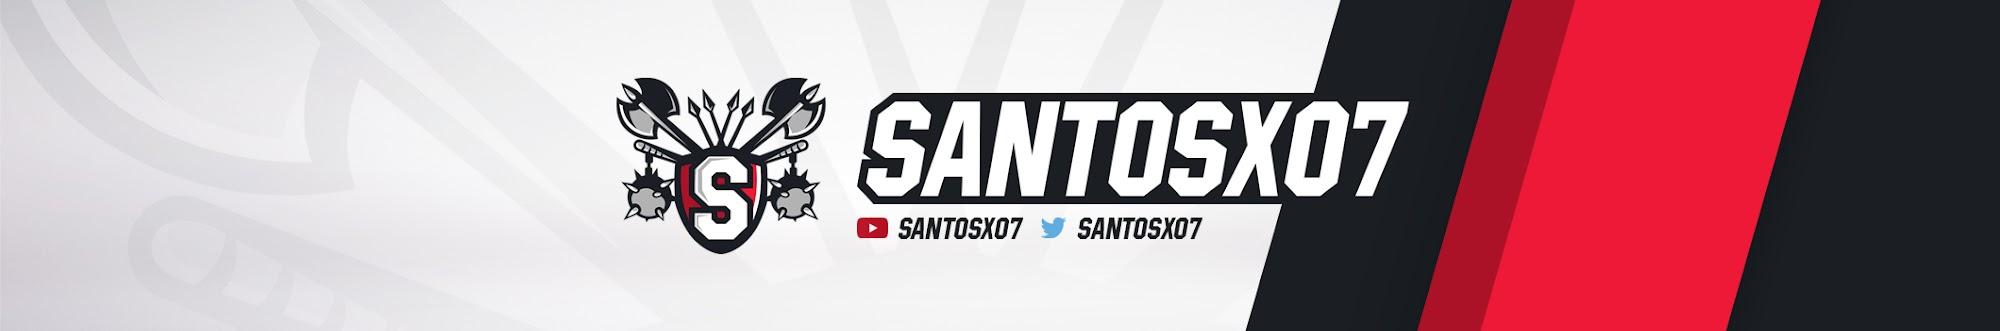 Santosx07